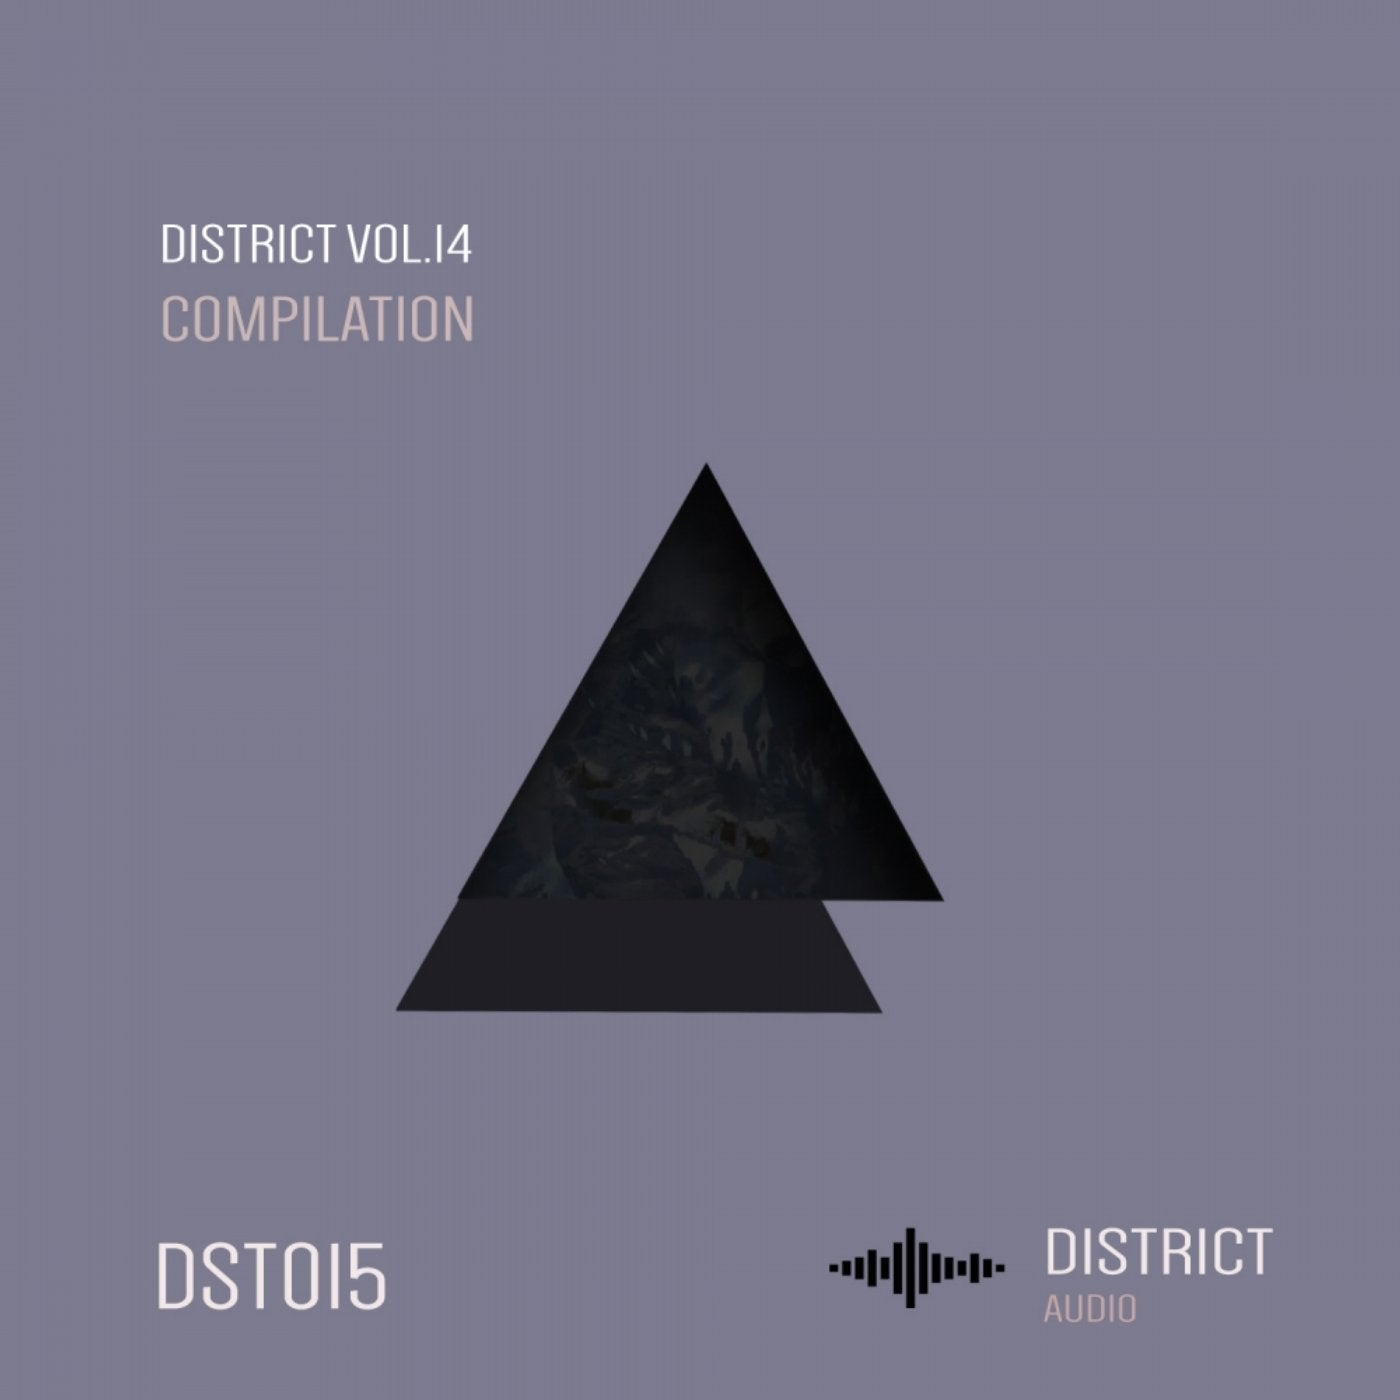 District 14